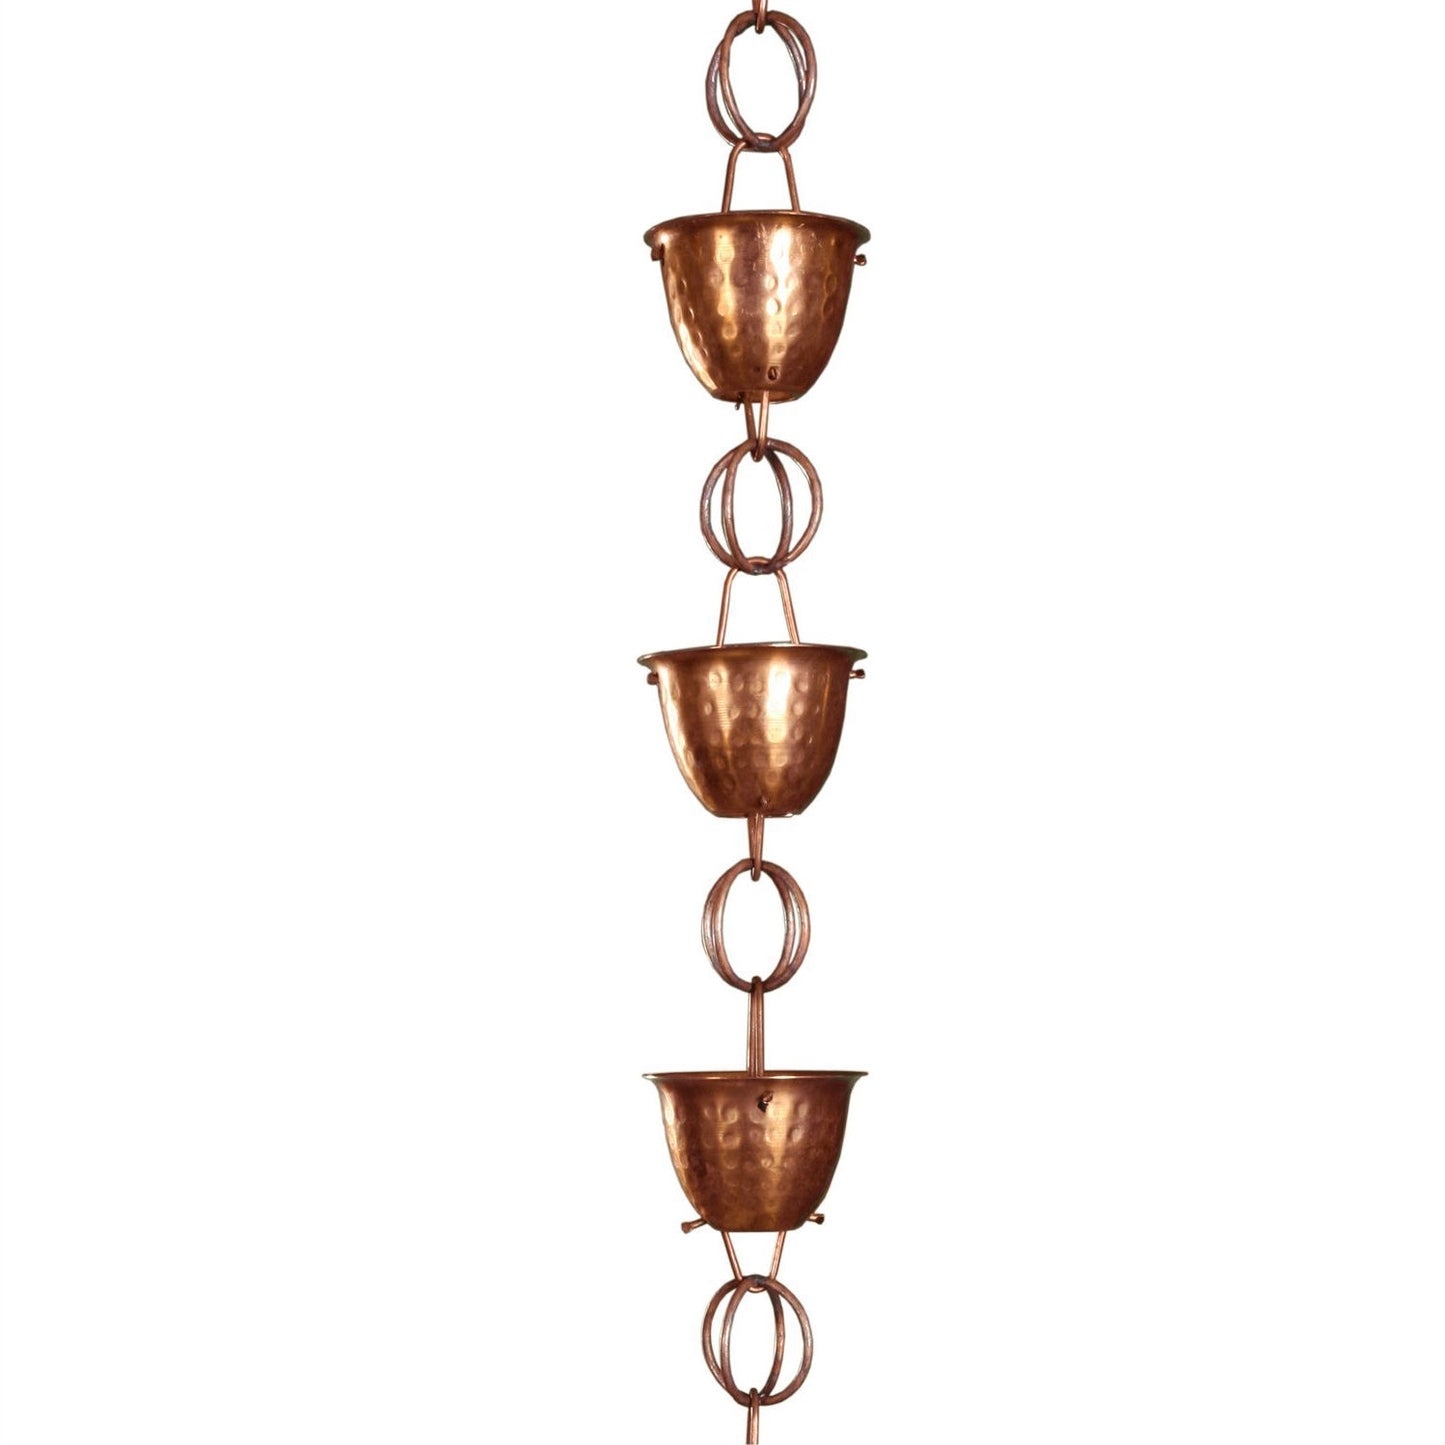 Hammered Copper Cups 8.5-Feet Rain Chain Rain Gutter Downspout Alternative